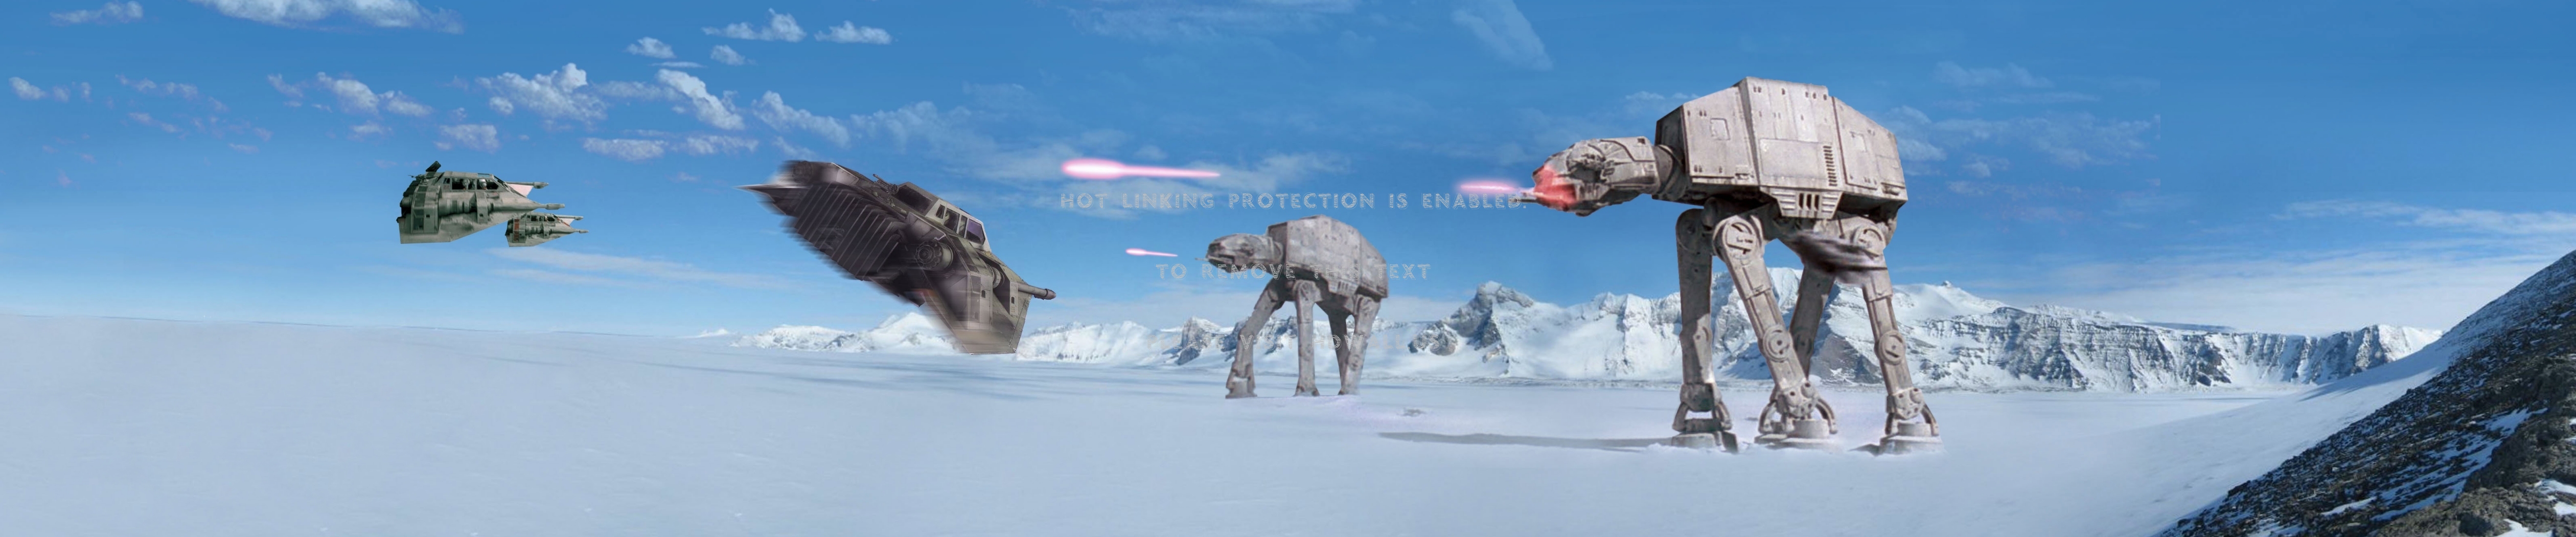 Star Wars Hoth At-at The Empire Strikes Back - Star Wars Wallpaper Panorama , HD Wallpaper & Backgrounds